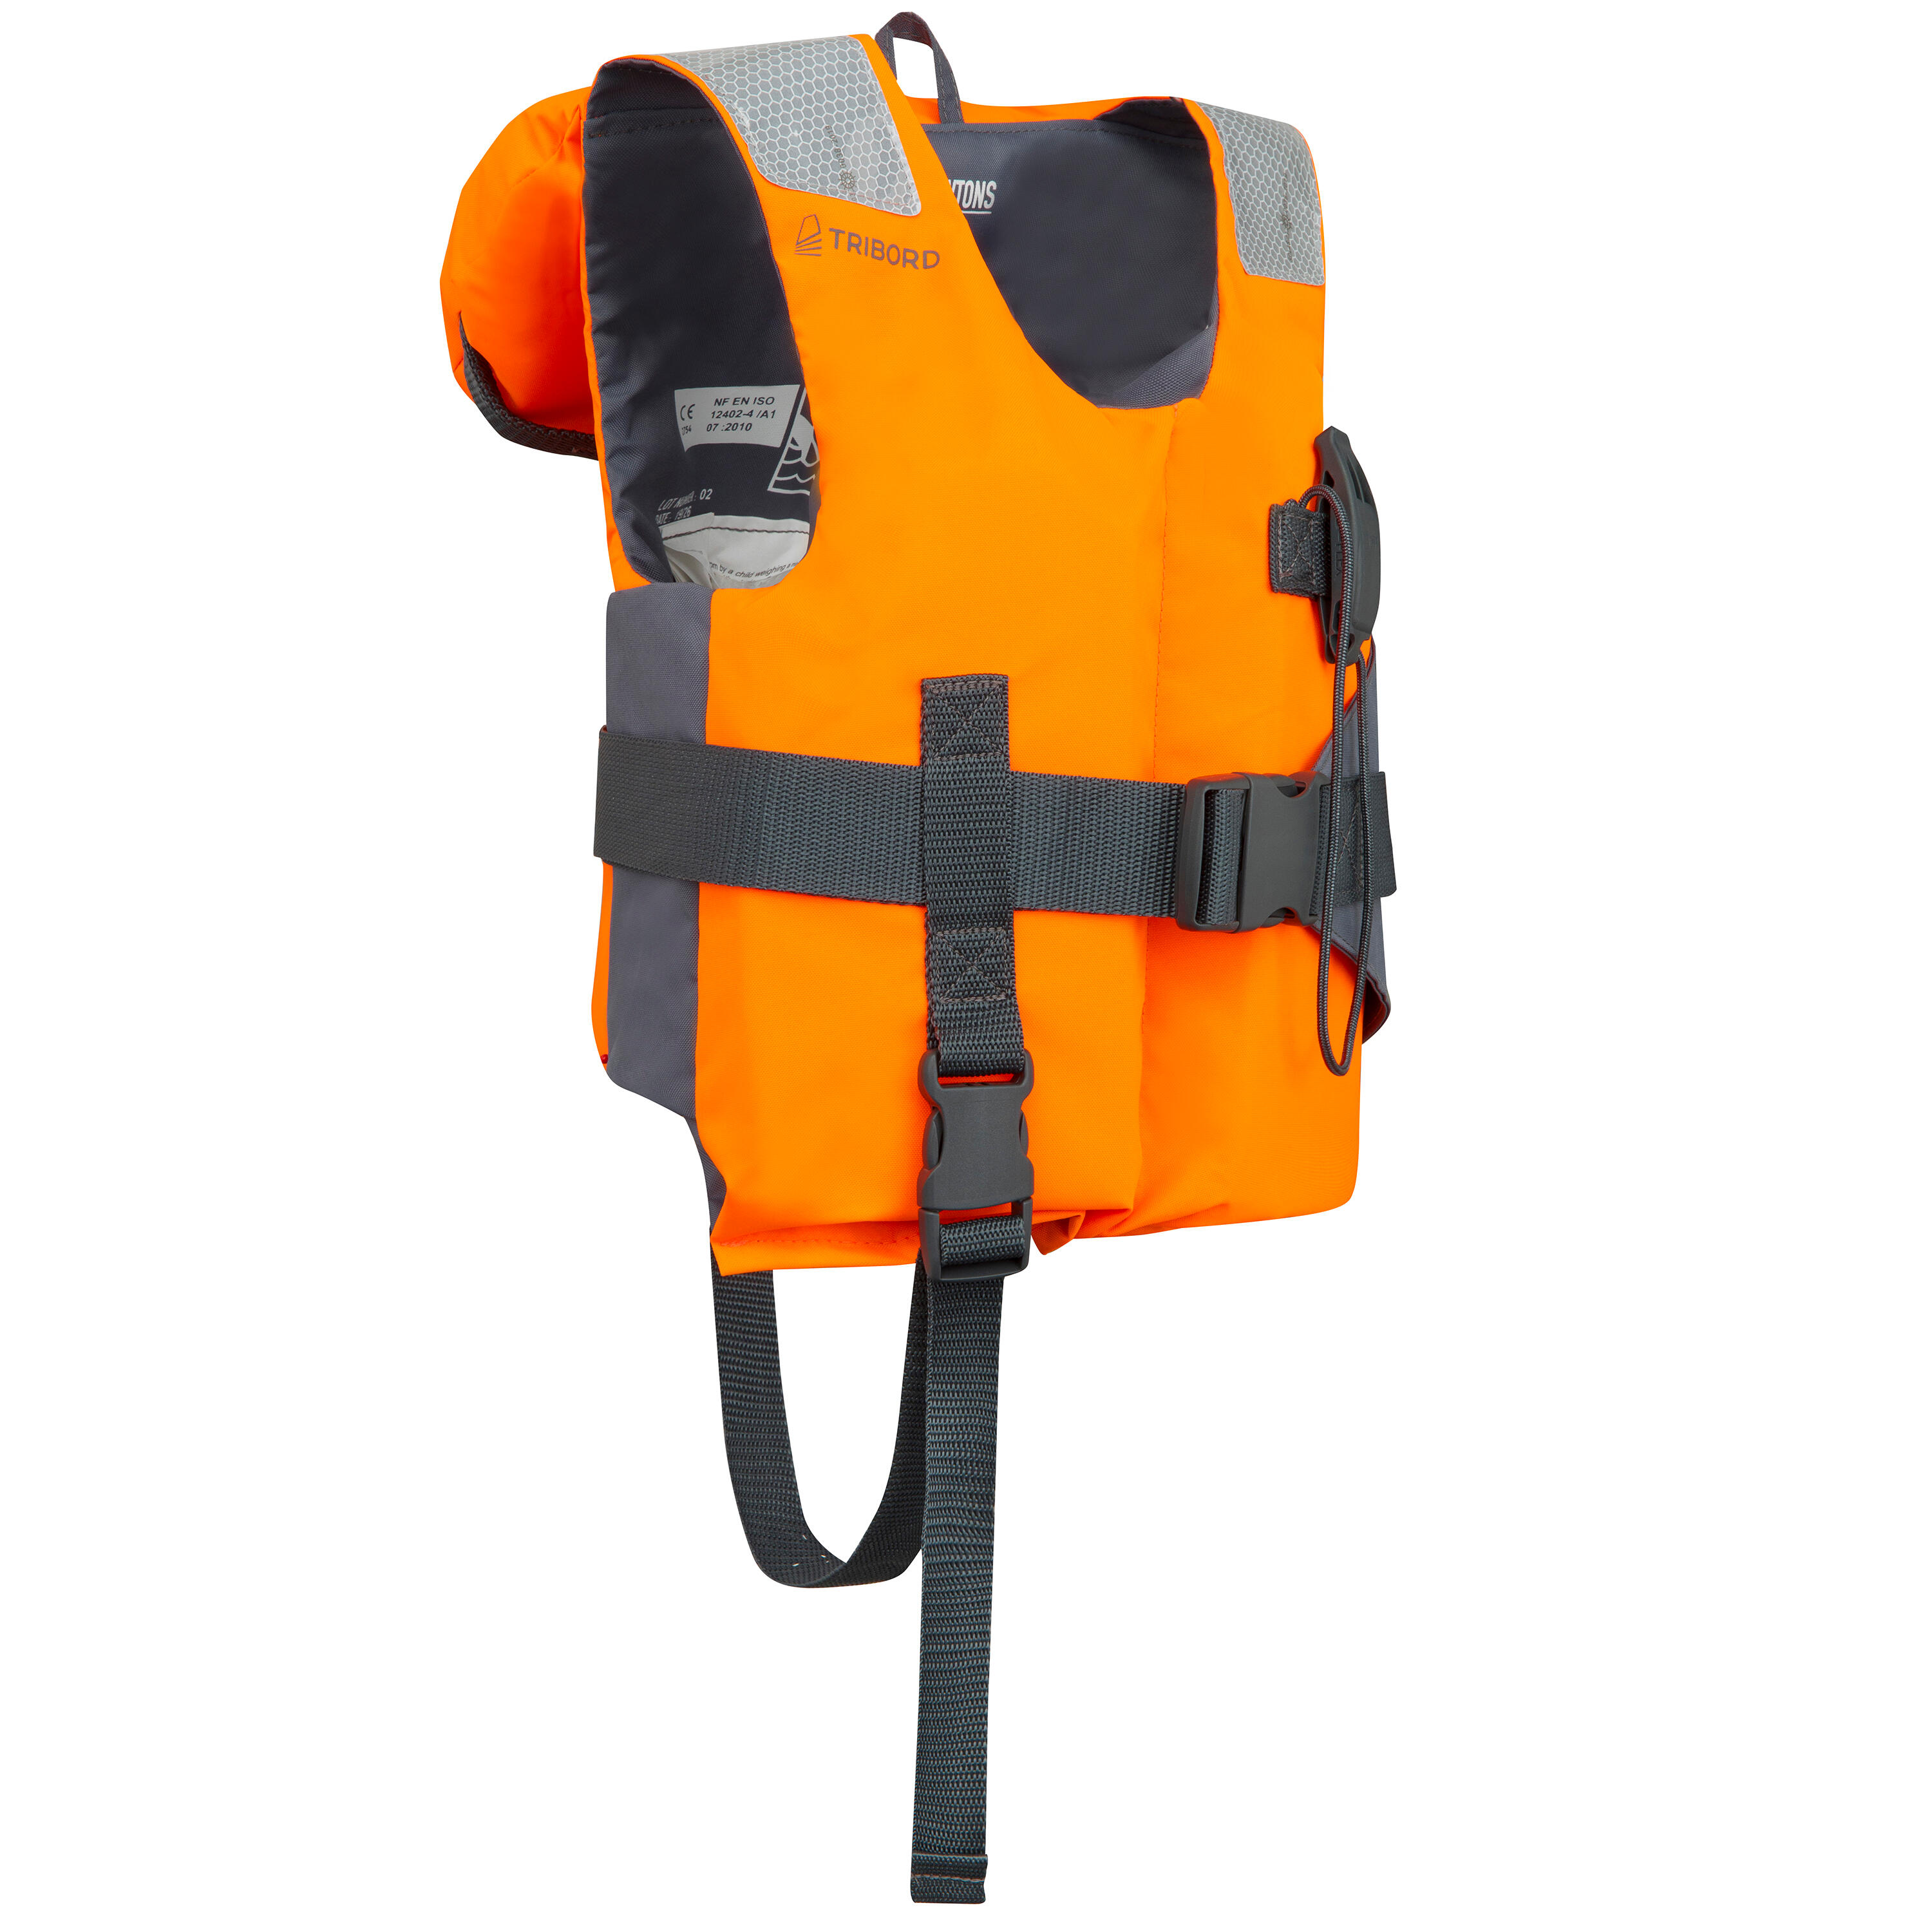 Kids' life jacket LJ100N Easy JR 15-40 kg - orange/grey